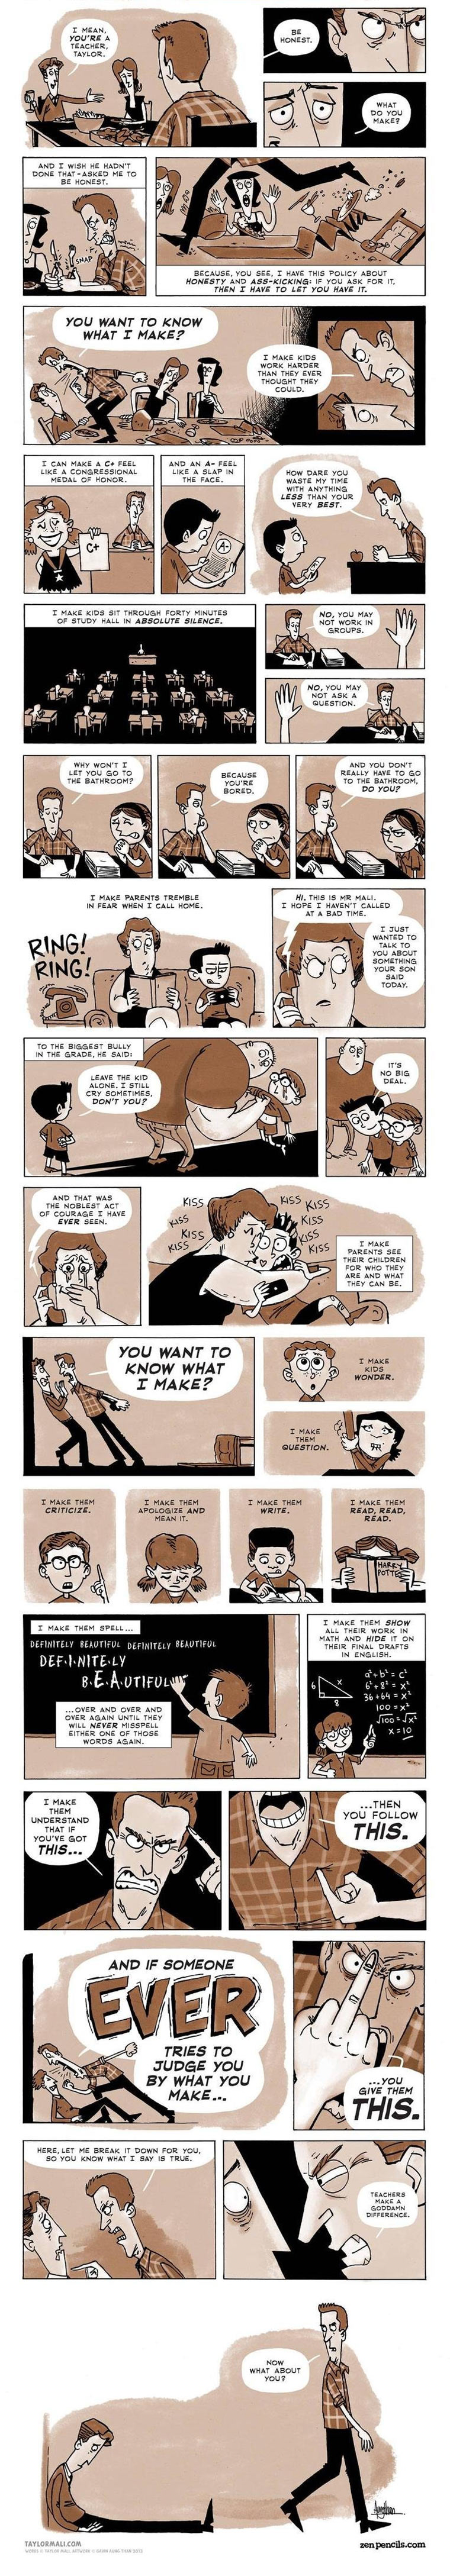 Comic: What makes a teacher? lehrercomic_02 